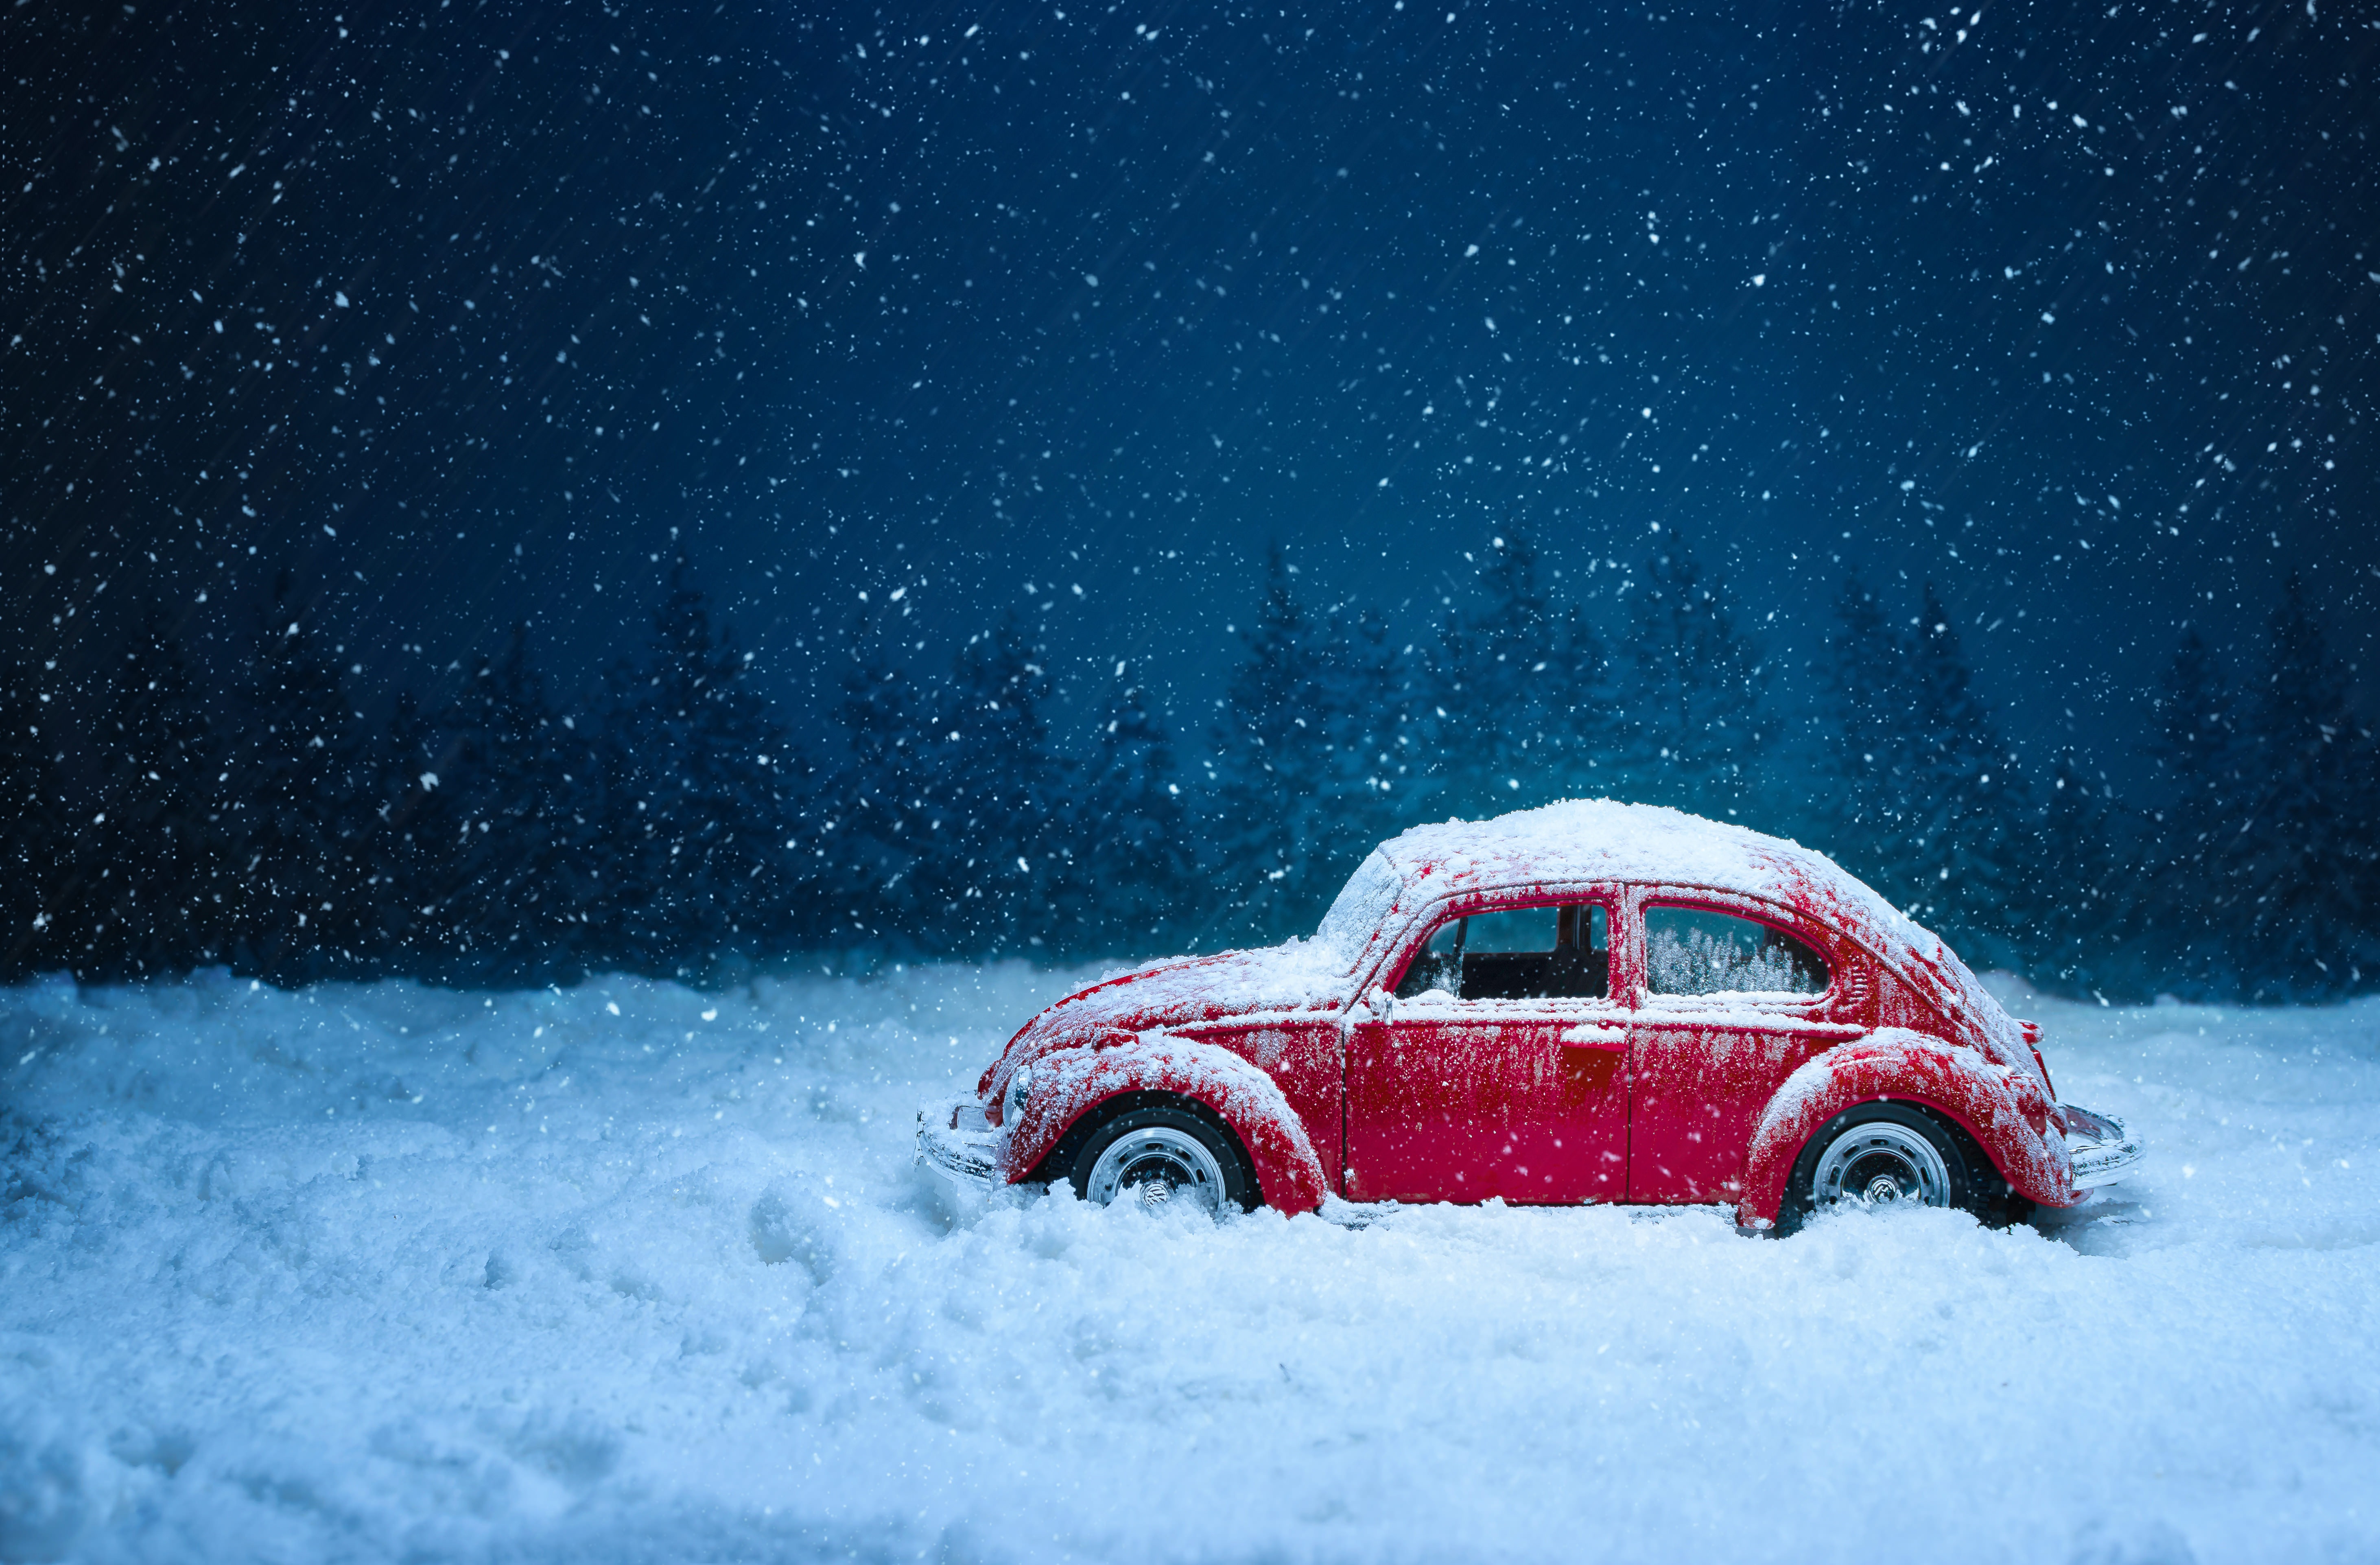 Free HD snowfall, snow, winter, cars, red, car, old, vintage, retro